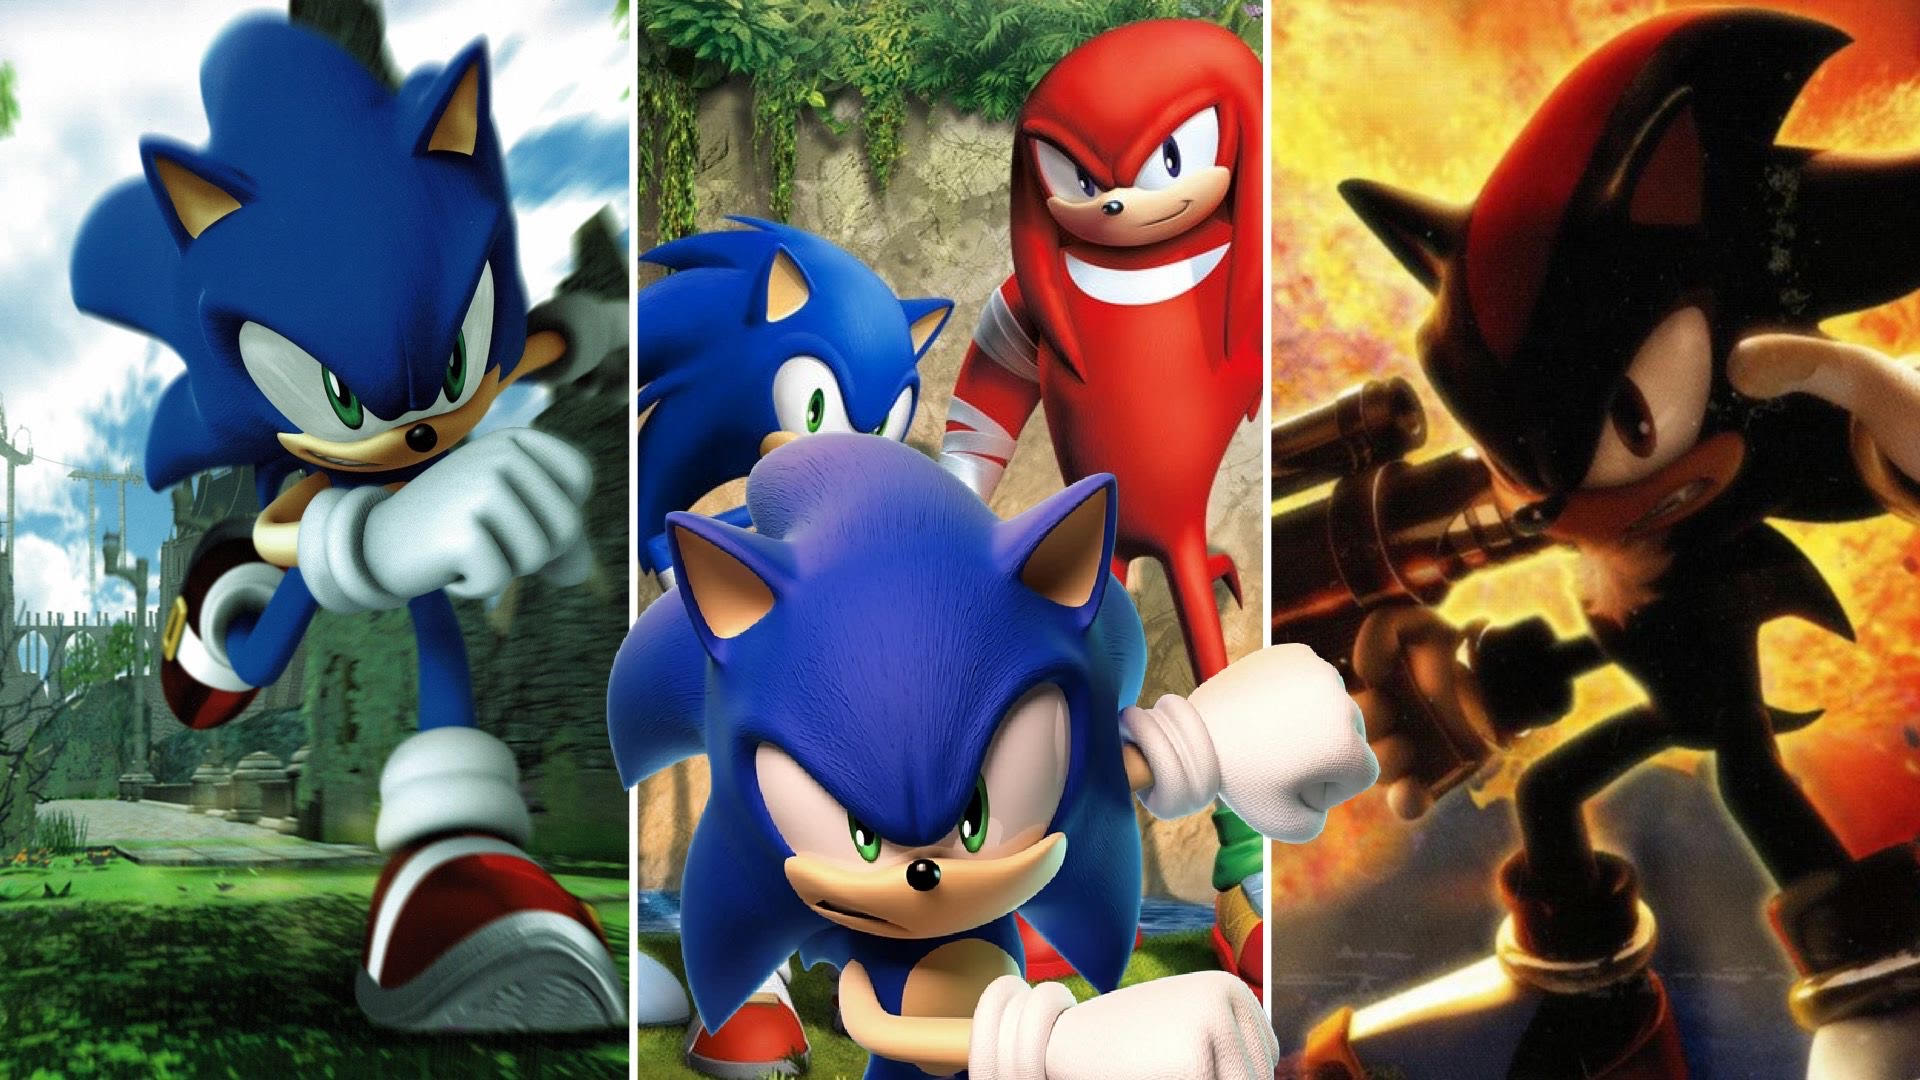 6 NEW Sonic The Hedgehog Games In Development!? - 2D Modern Sonic